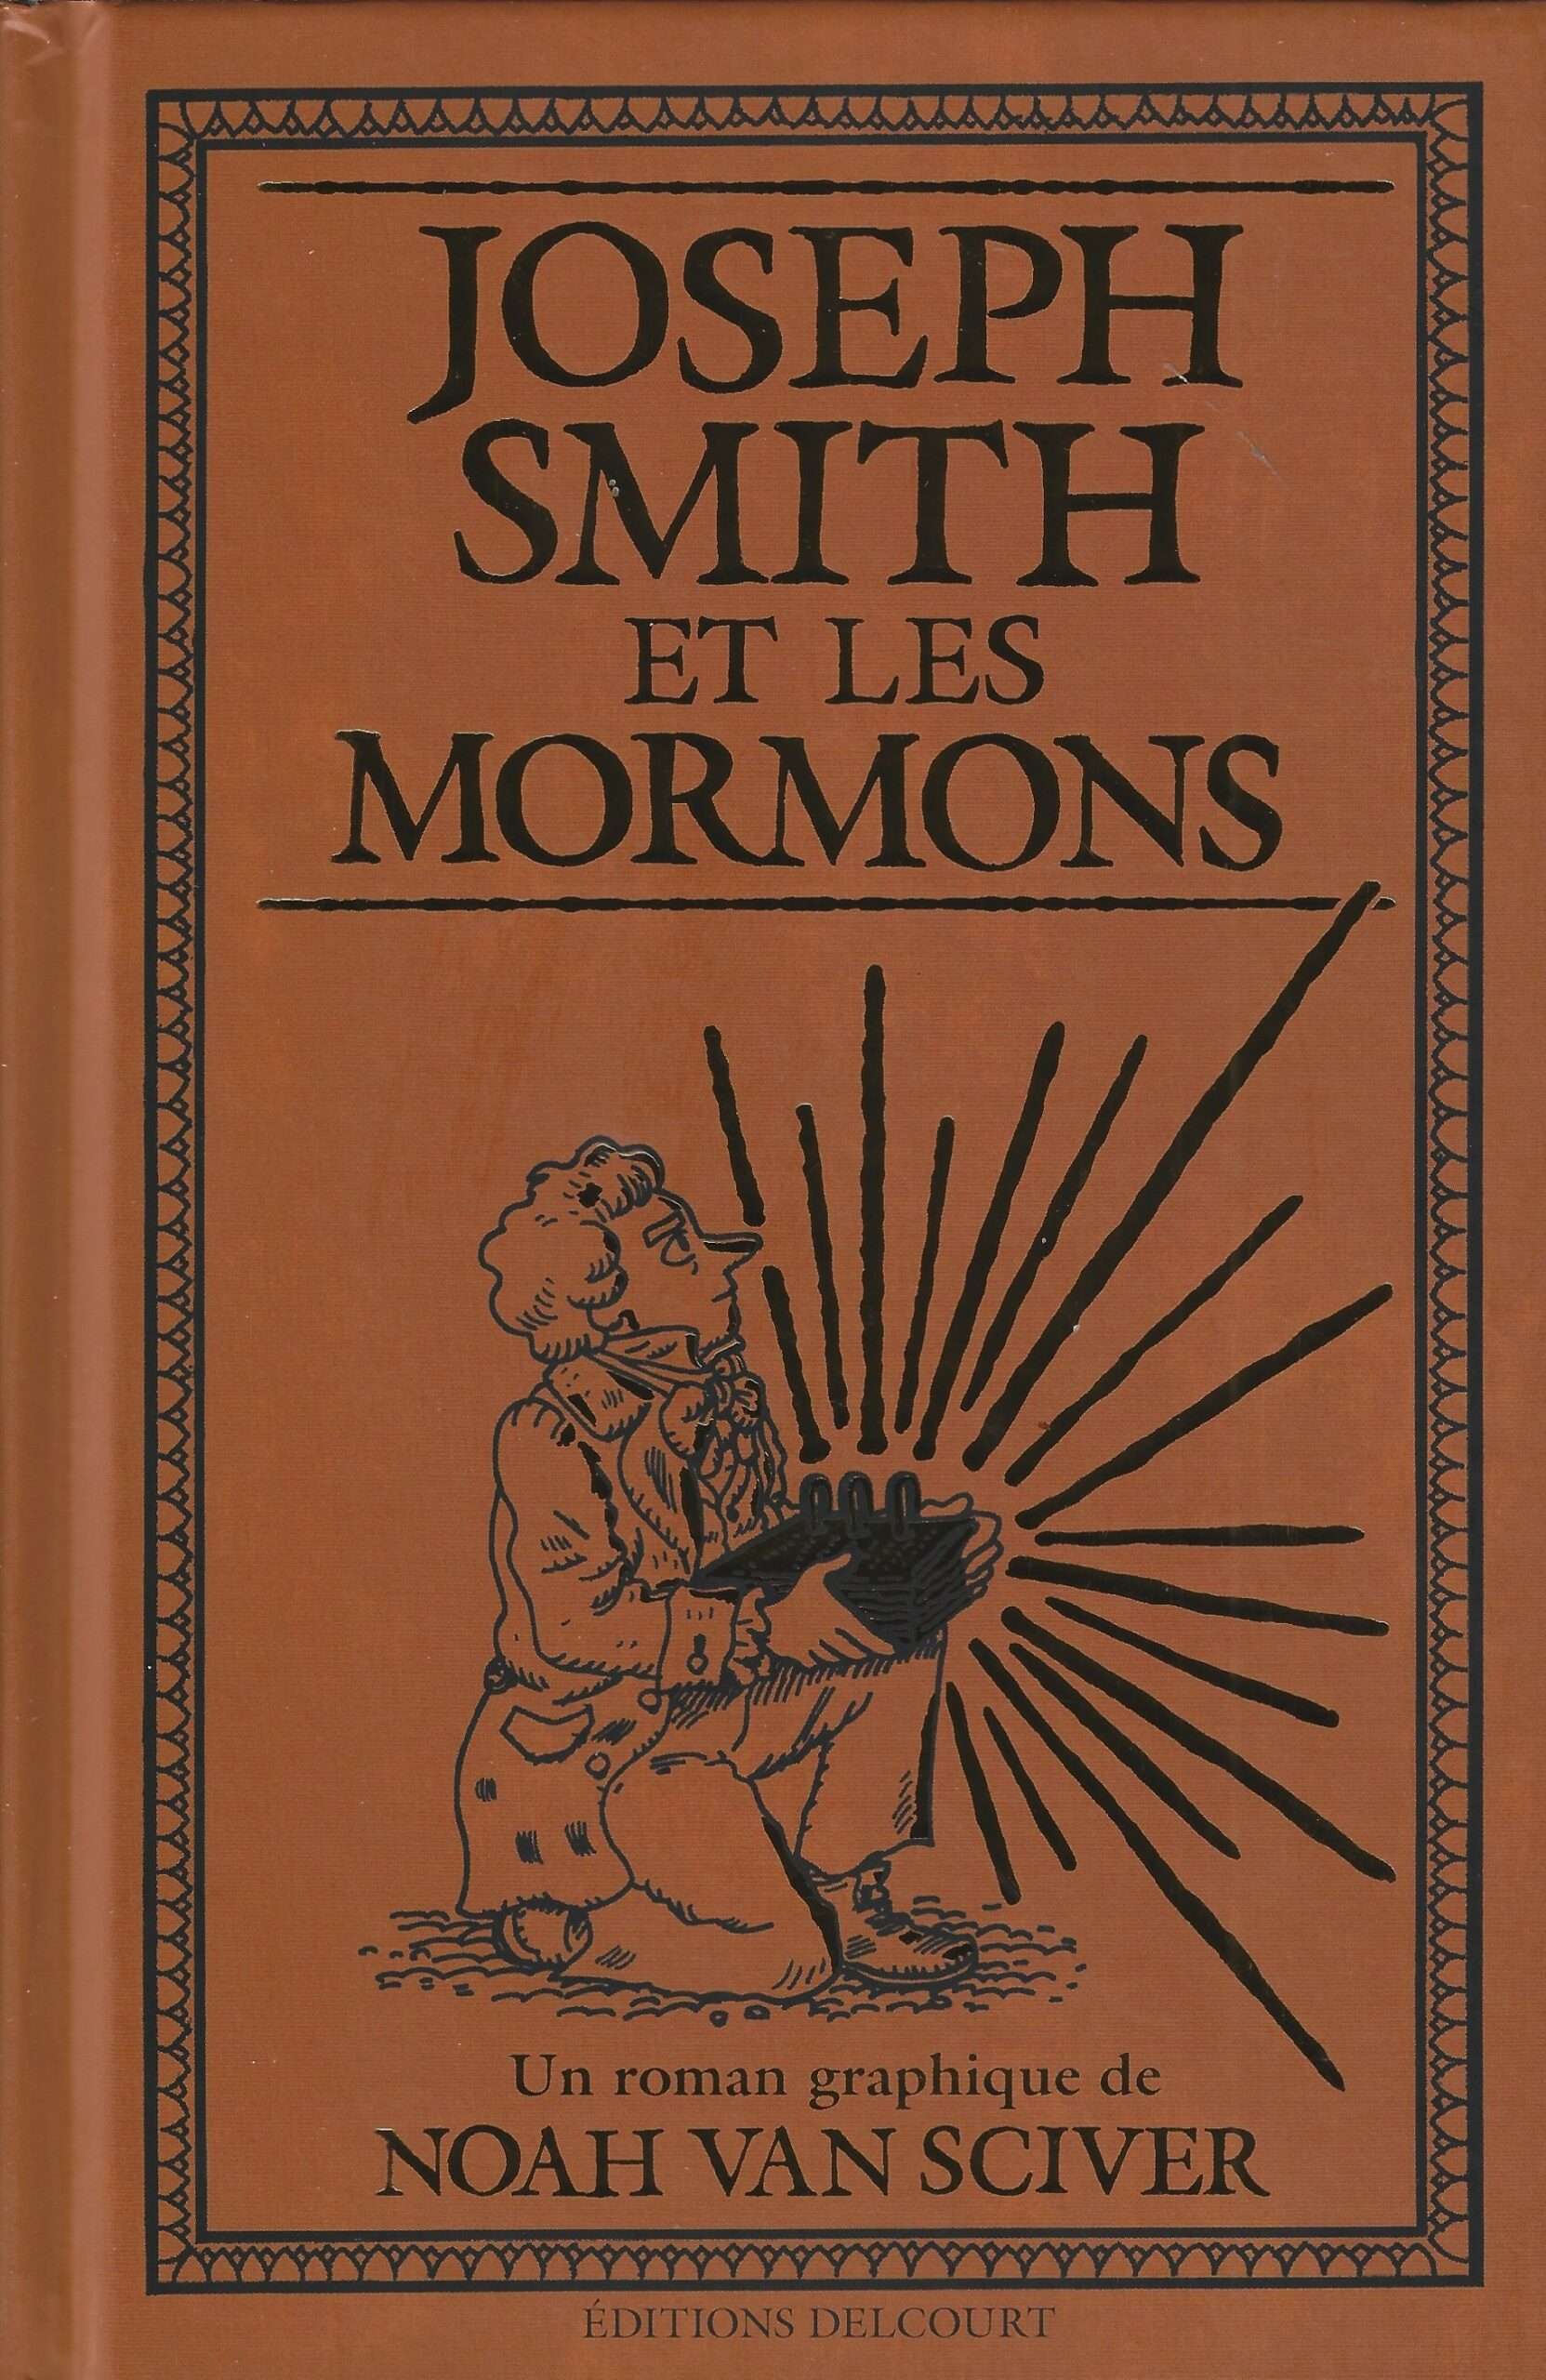 joseph smith mormons delcourt 20 03